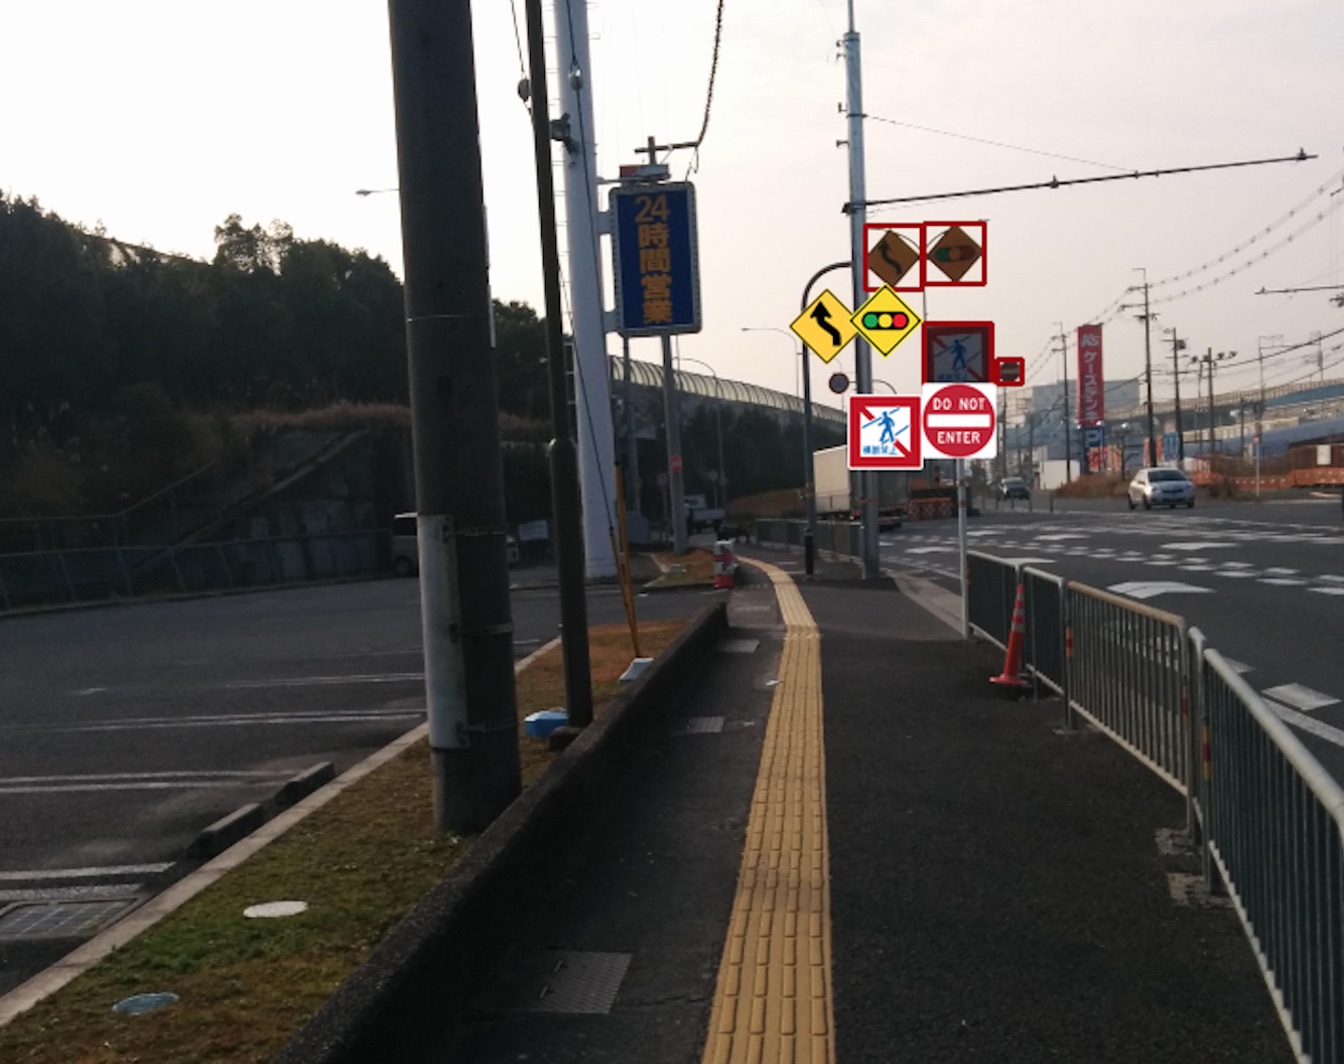 Japanese traffic signs